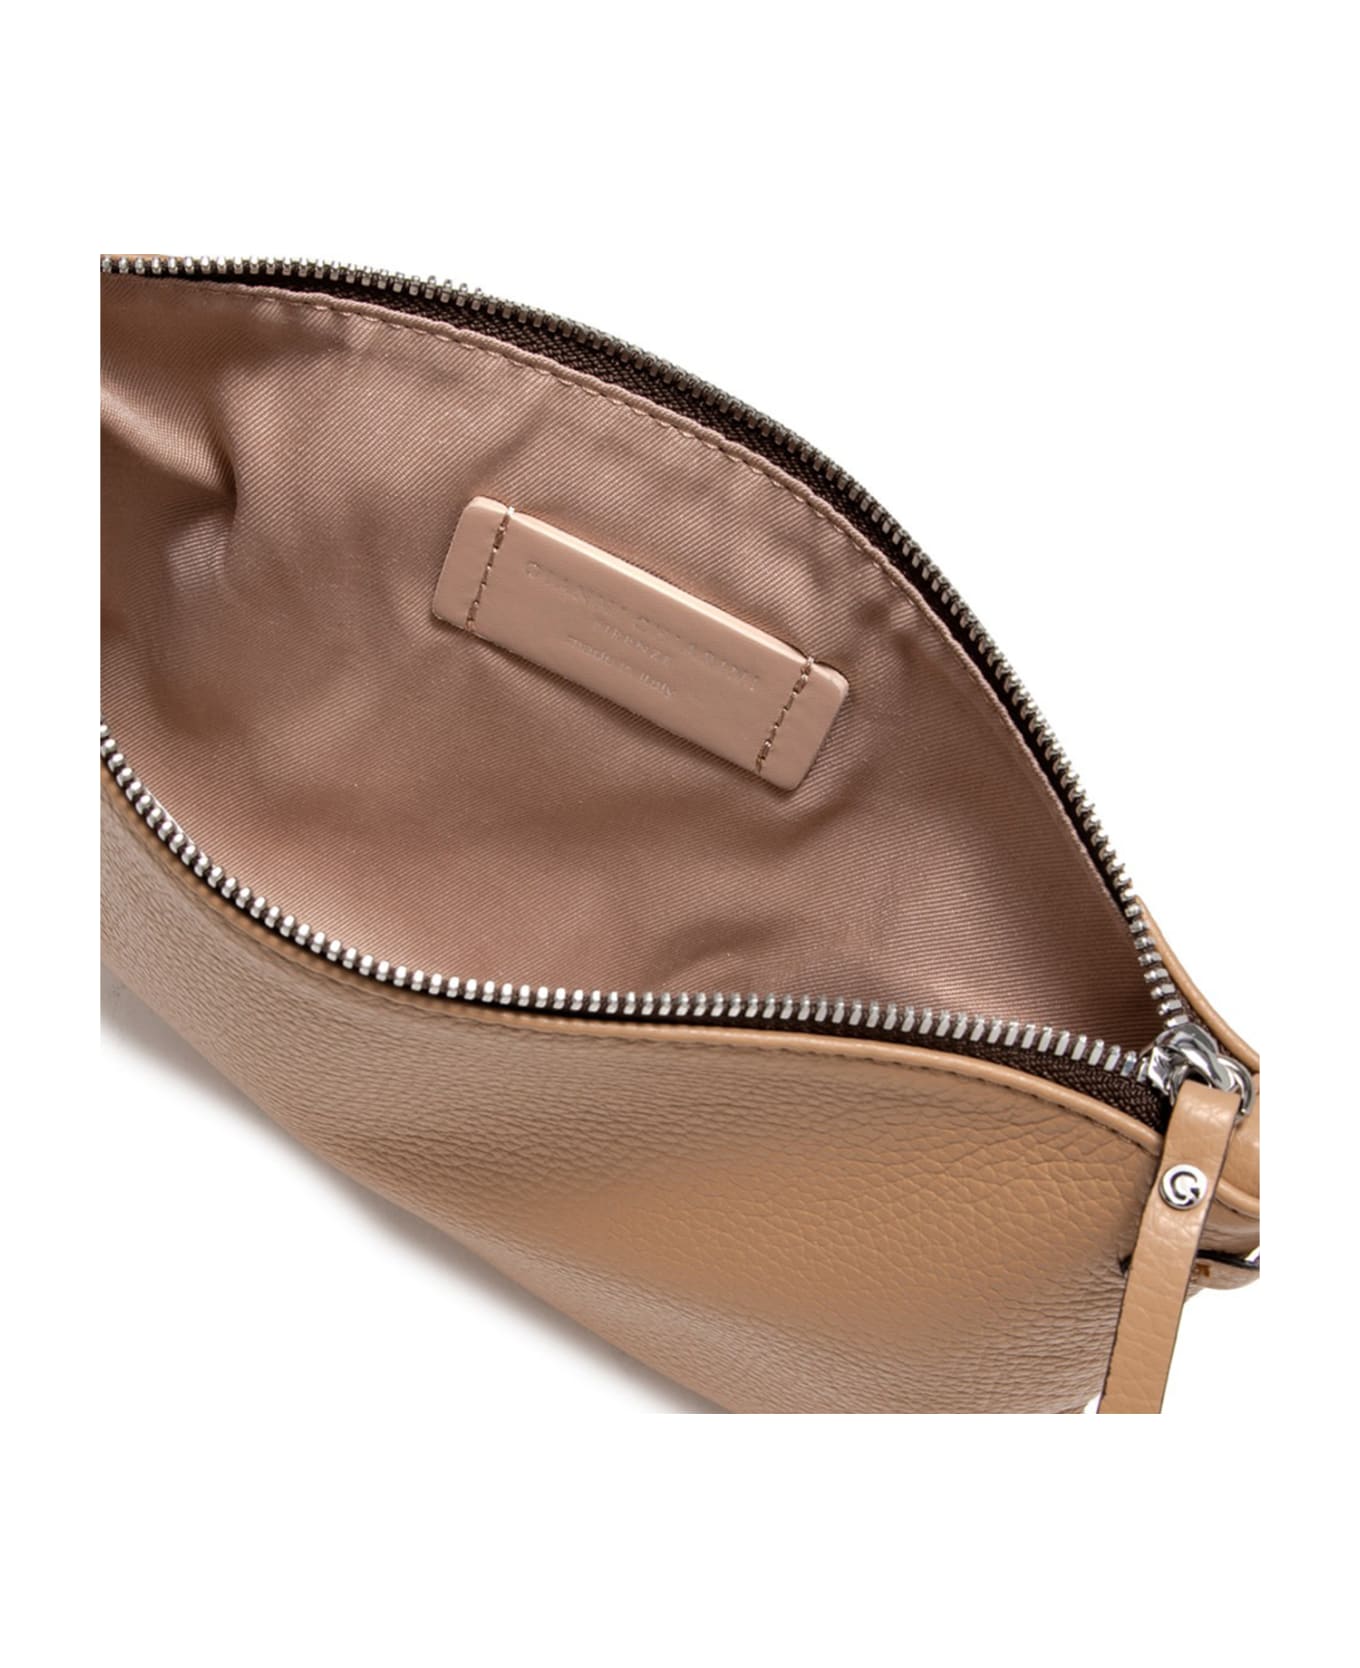 Gianni Chiarini Hermy Leather Clutch Bag - NATURE